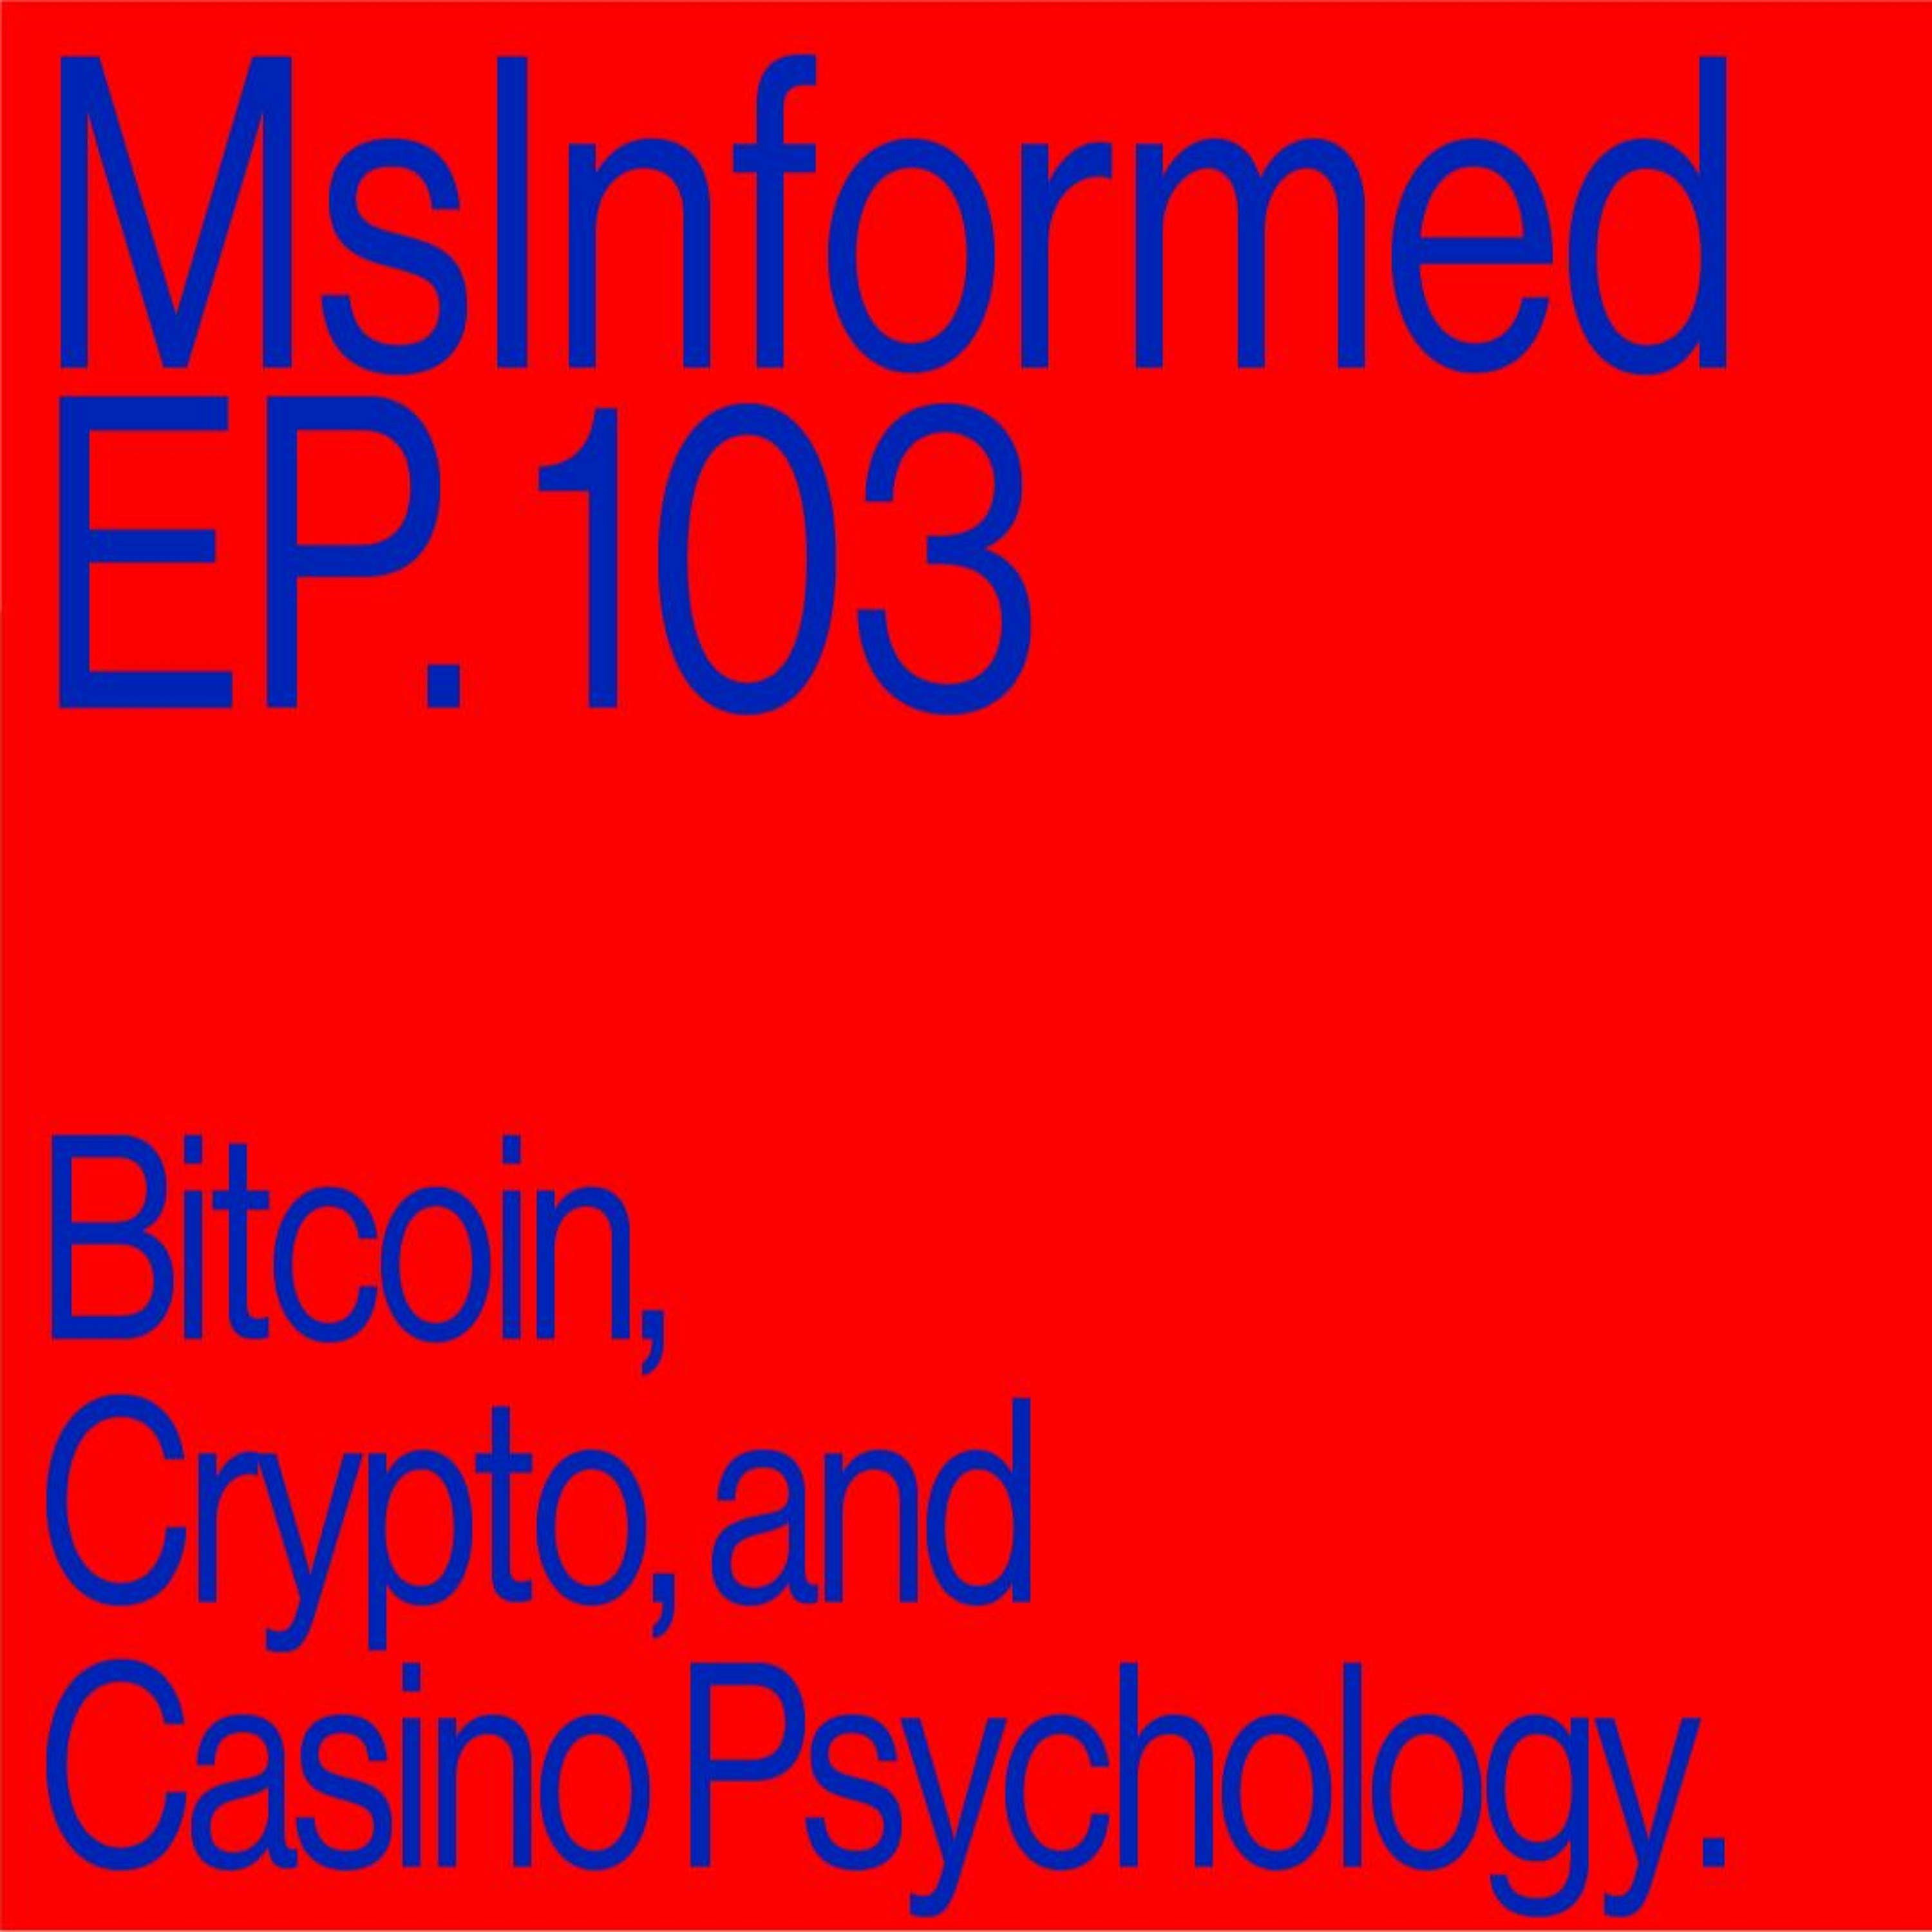 Episode 103: Bitcoin, Crypto and Casino Psychology